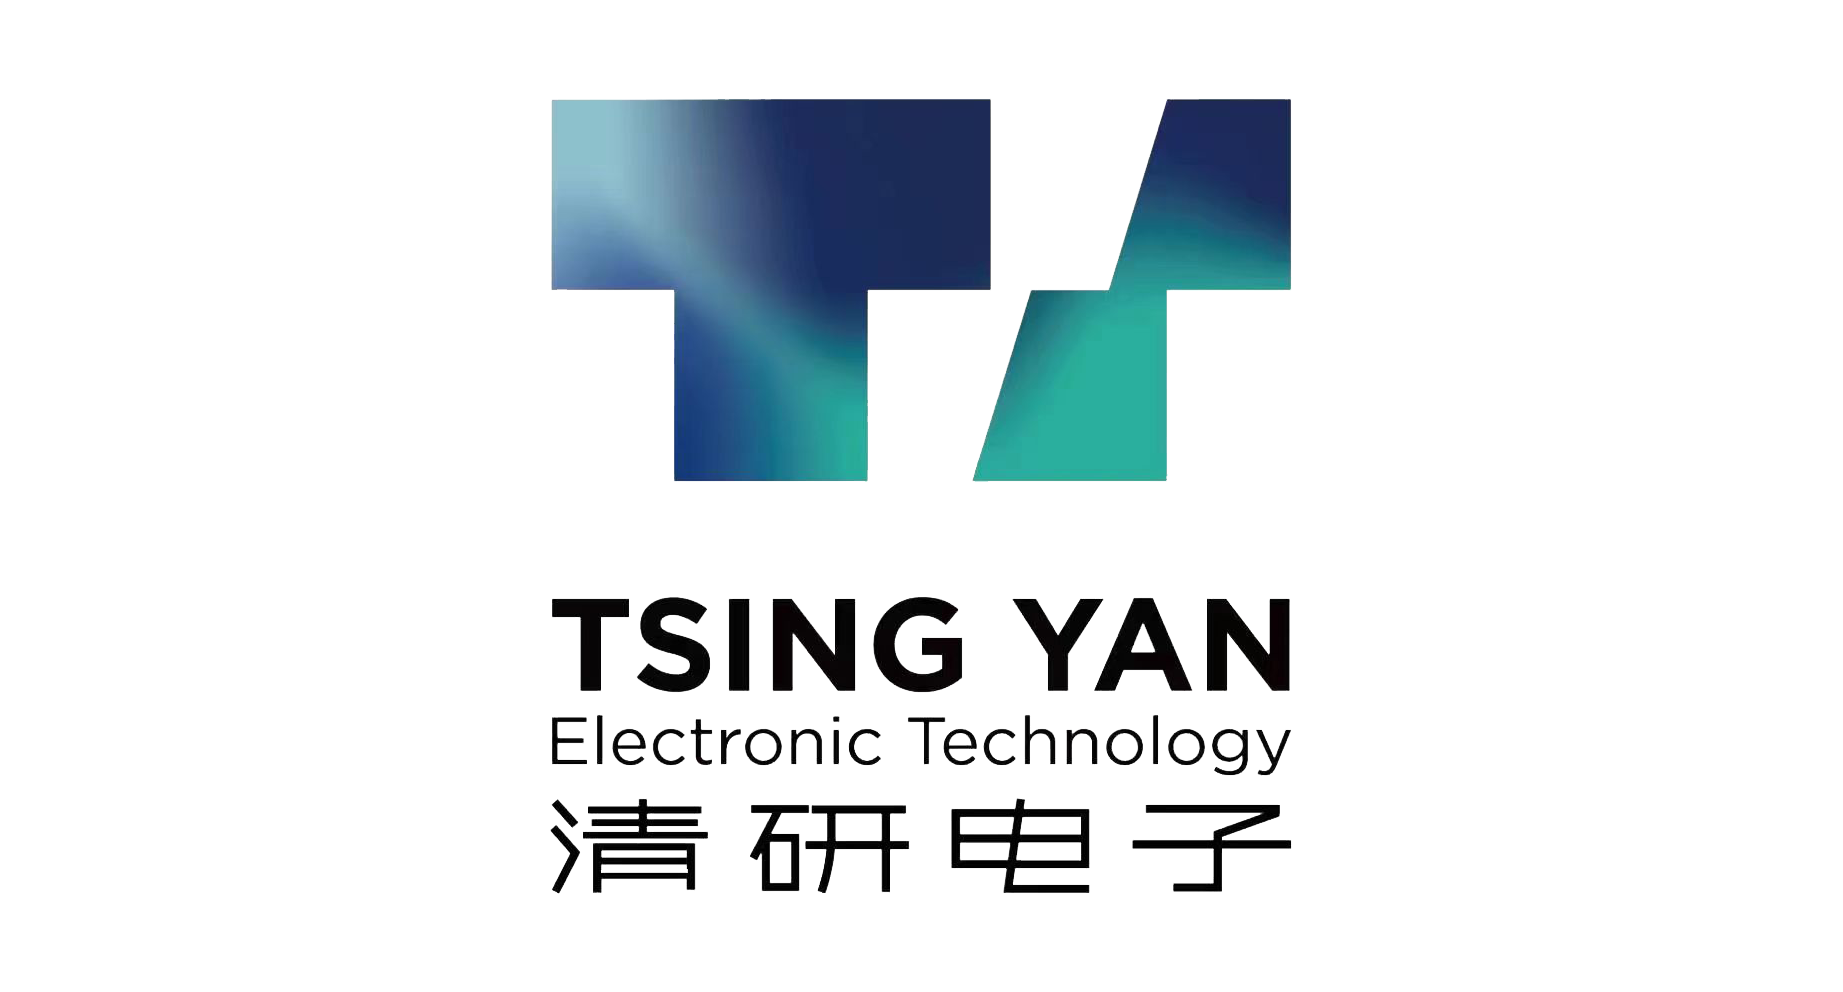  Tsingyan Electronic